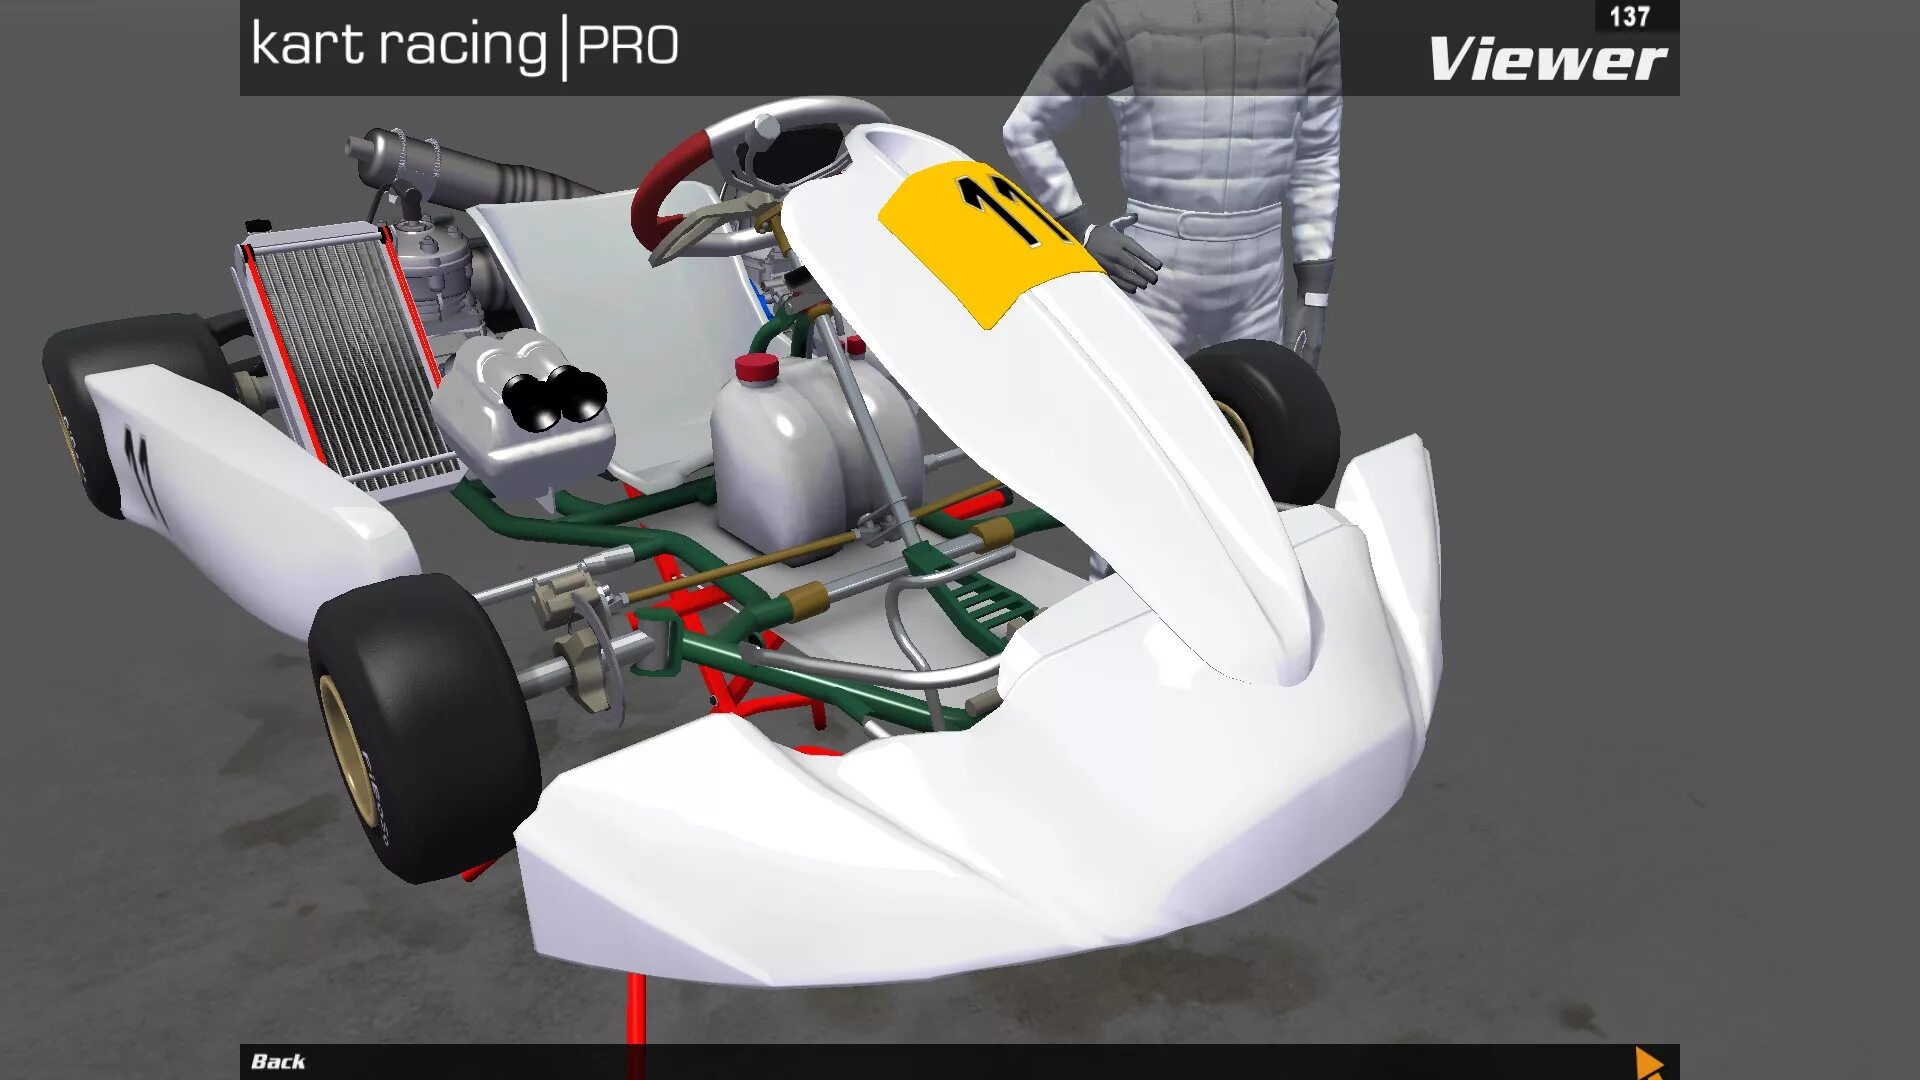 Kart Racing Pro. Картинг Эстетика. SD-Kart картинг. Newport картинг.